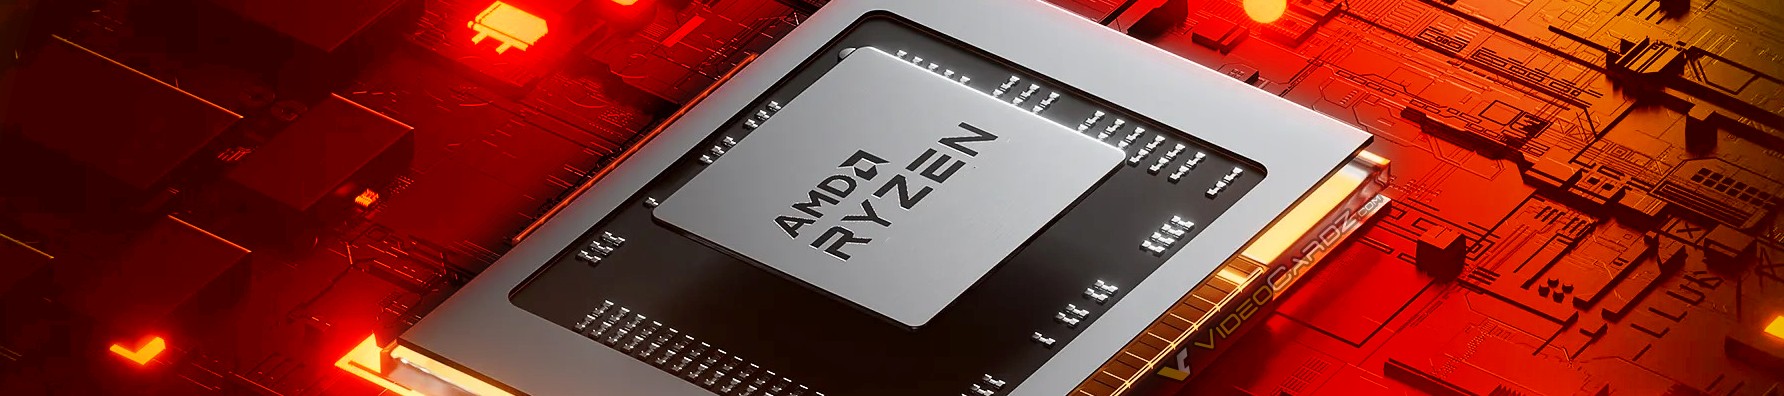 AMD-RYZEN-HERO-BANNER.jpg